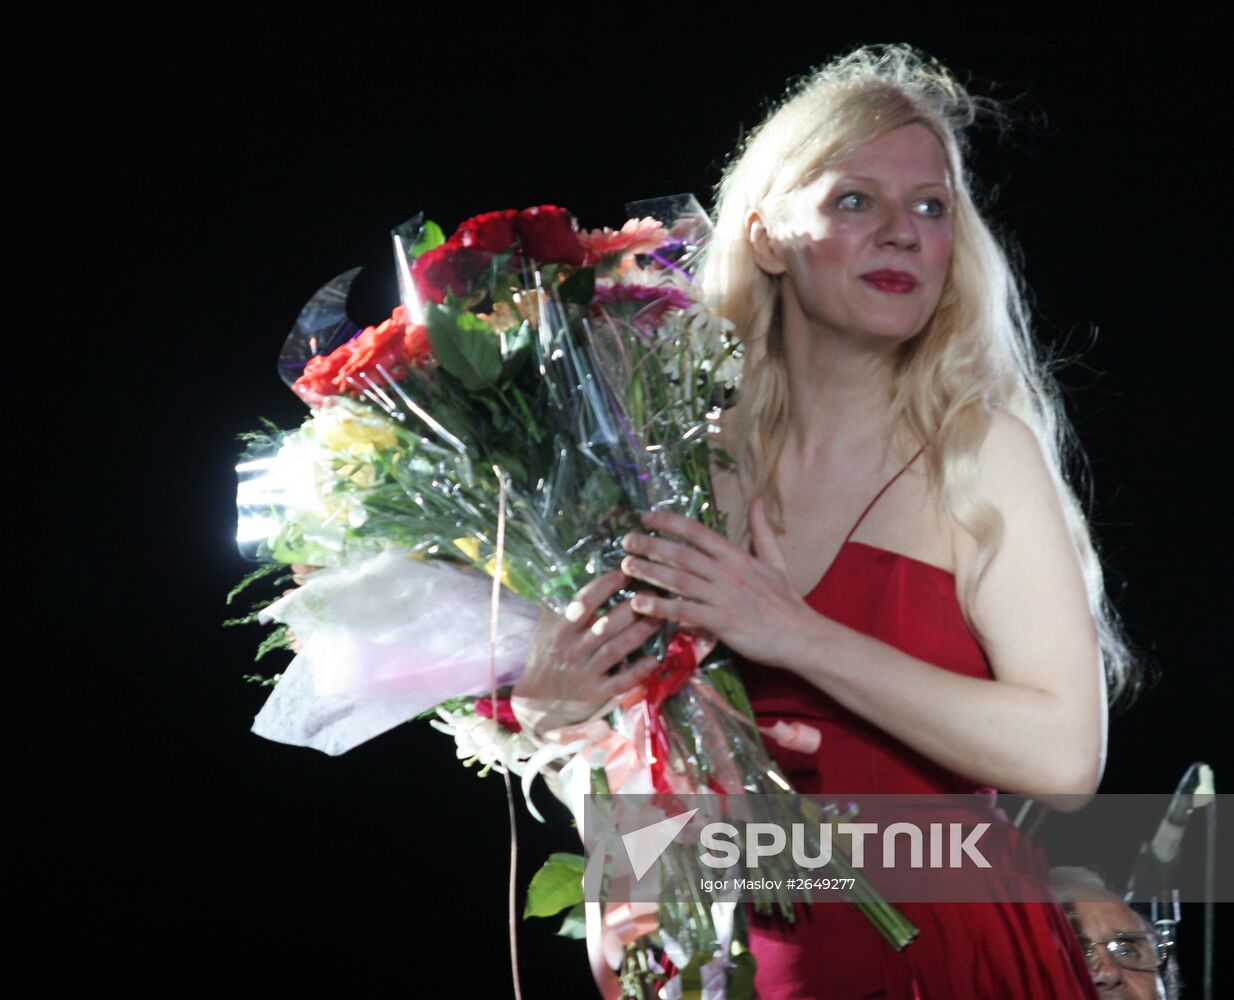 US pianist Valentina Lisitsa visits Donetsk